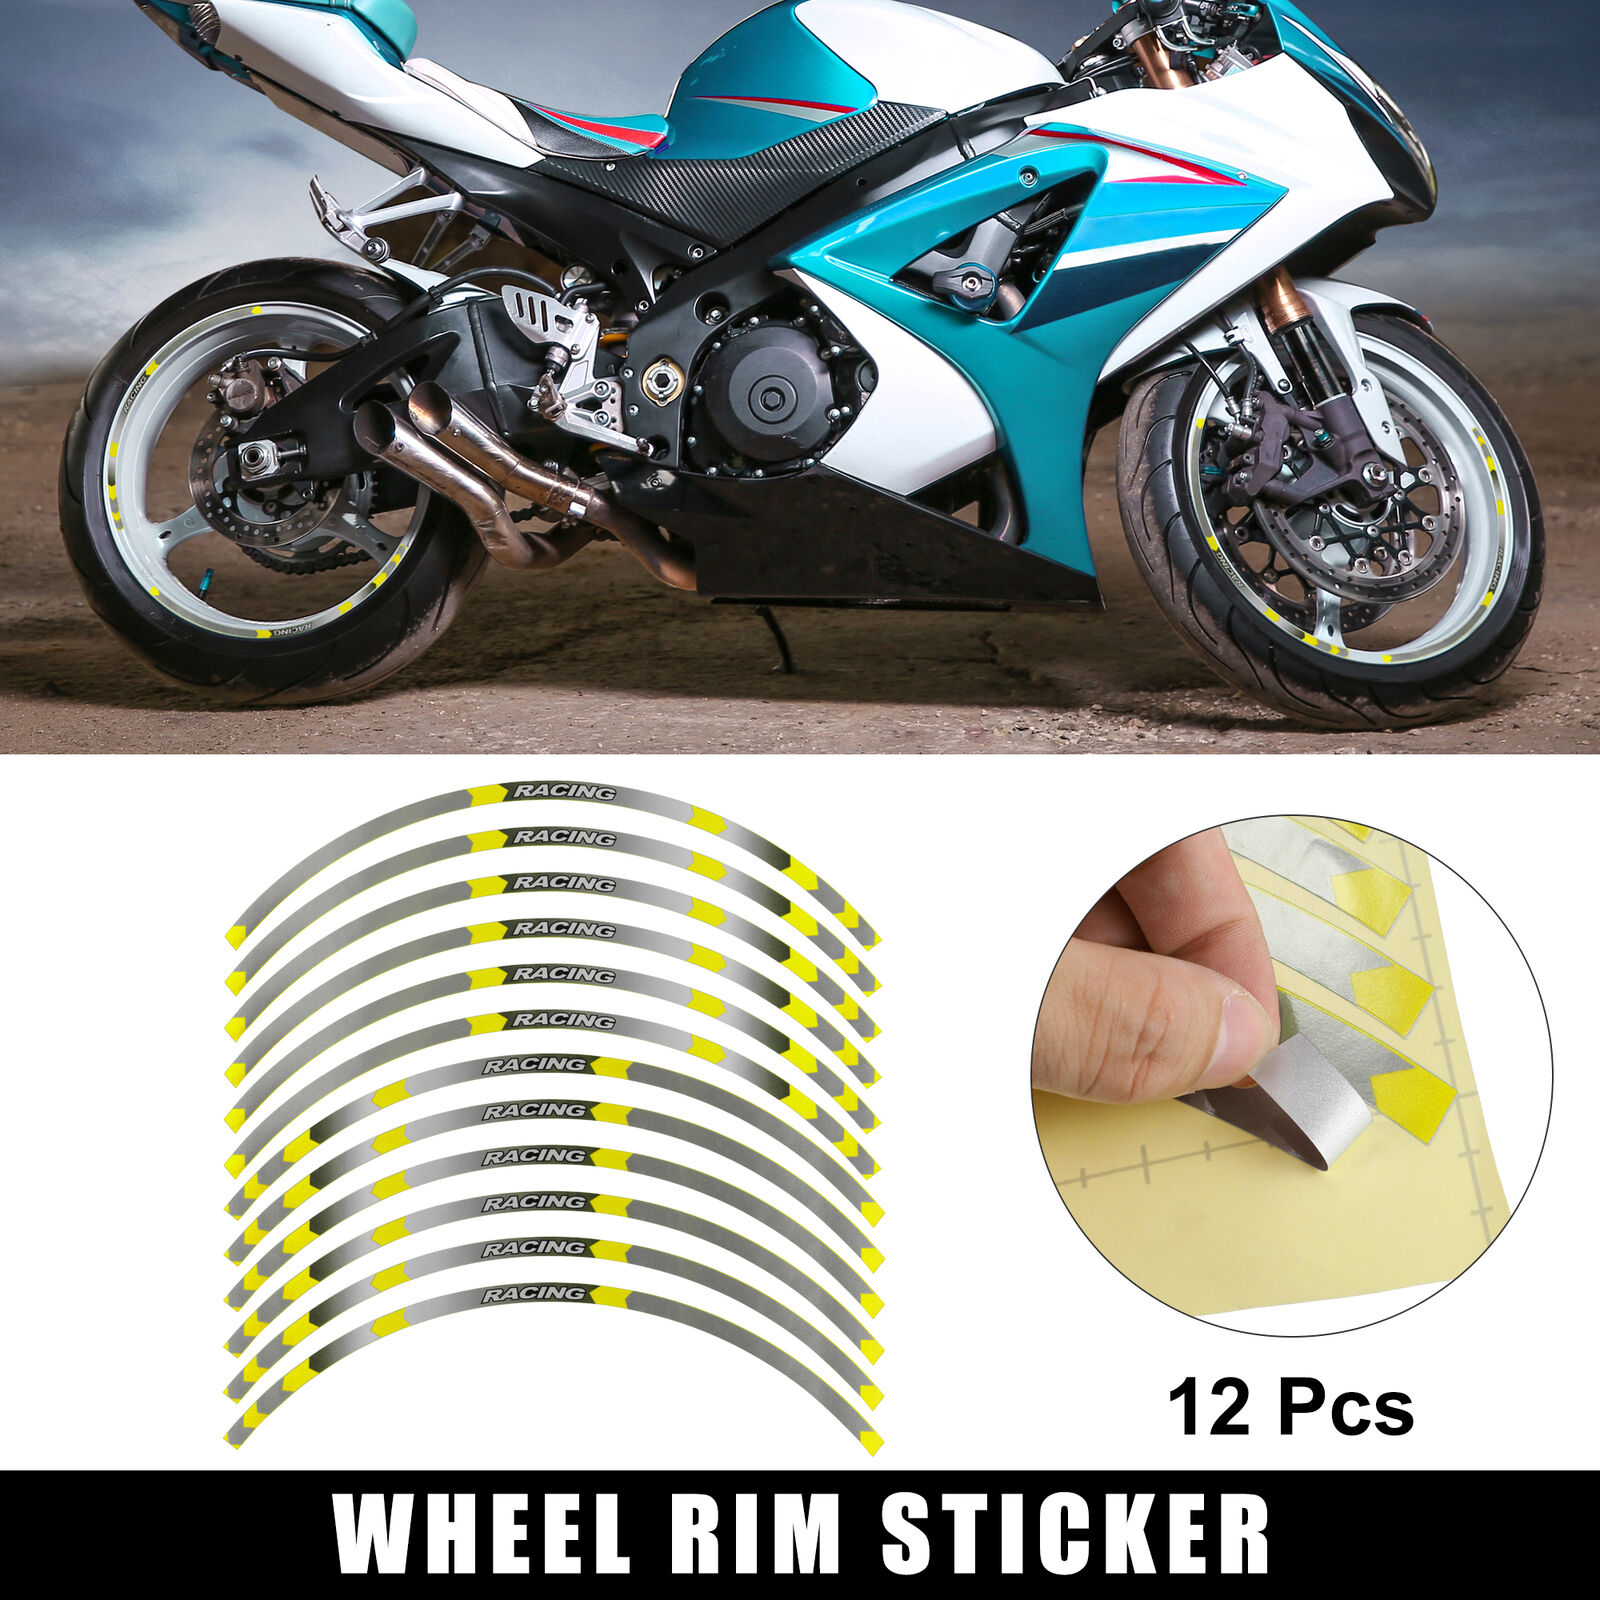 12pcs Fit 17inch Motorcycle Wheel Rim Decals for Suzuki GSX-R 250 Yellow Gray